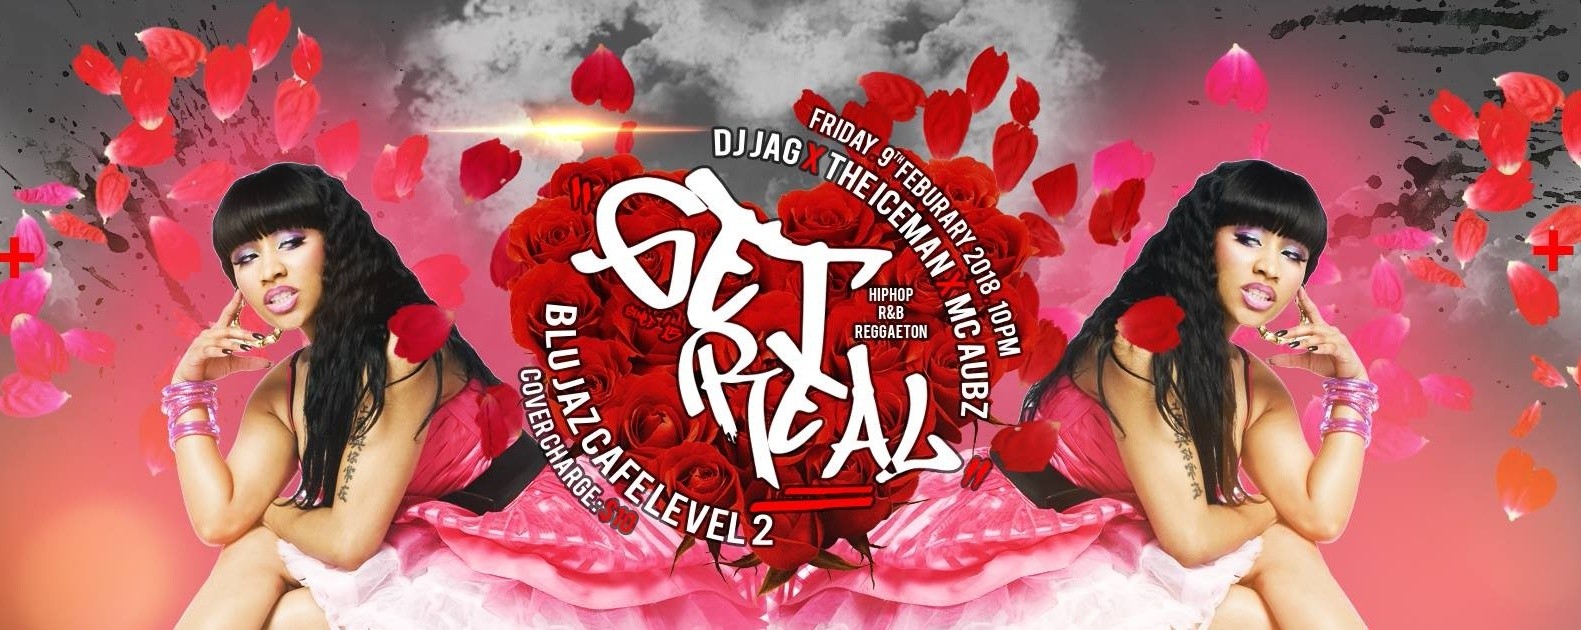 Get Real (2000s Hip Hop x RnB )